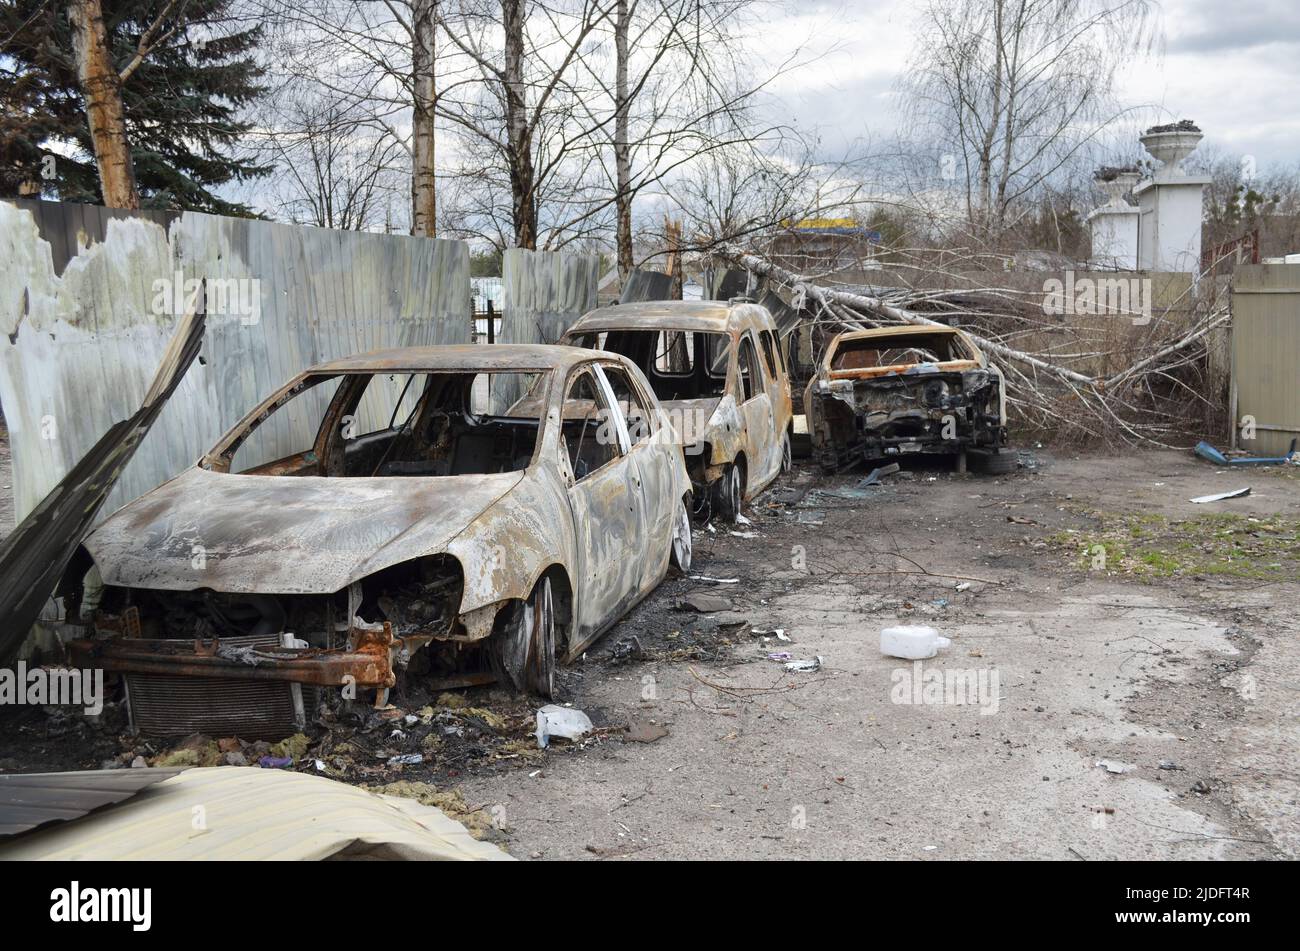 Mriya, Kyiv region, Ukraine - Apr 11, 2022: Burned and broken civilian cars in the Kiev region during the Russian invasion of Ukraine. Stock Photo